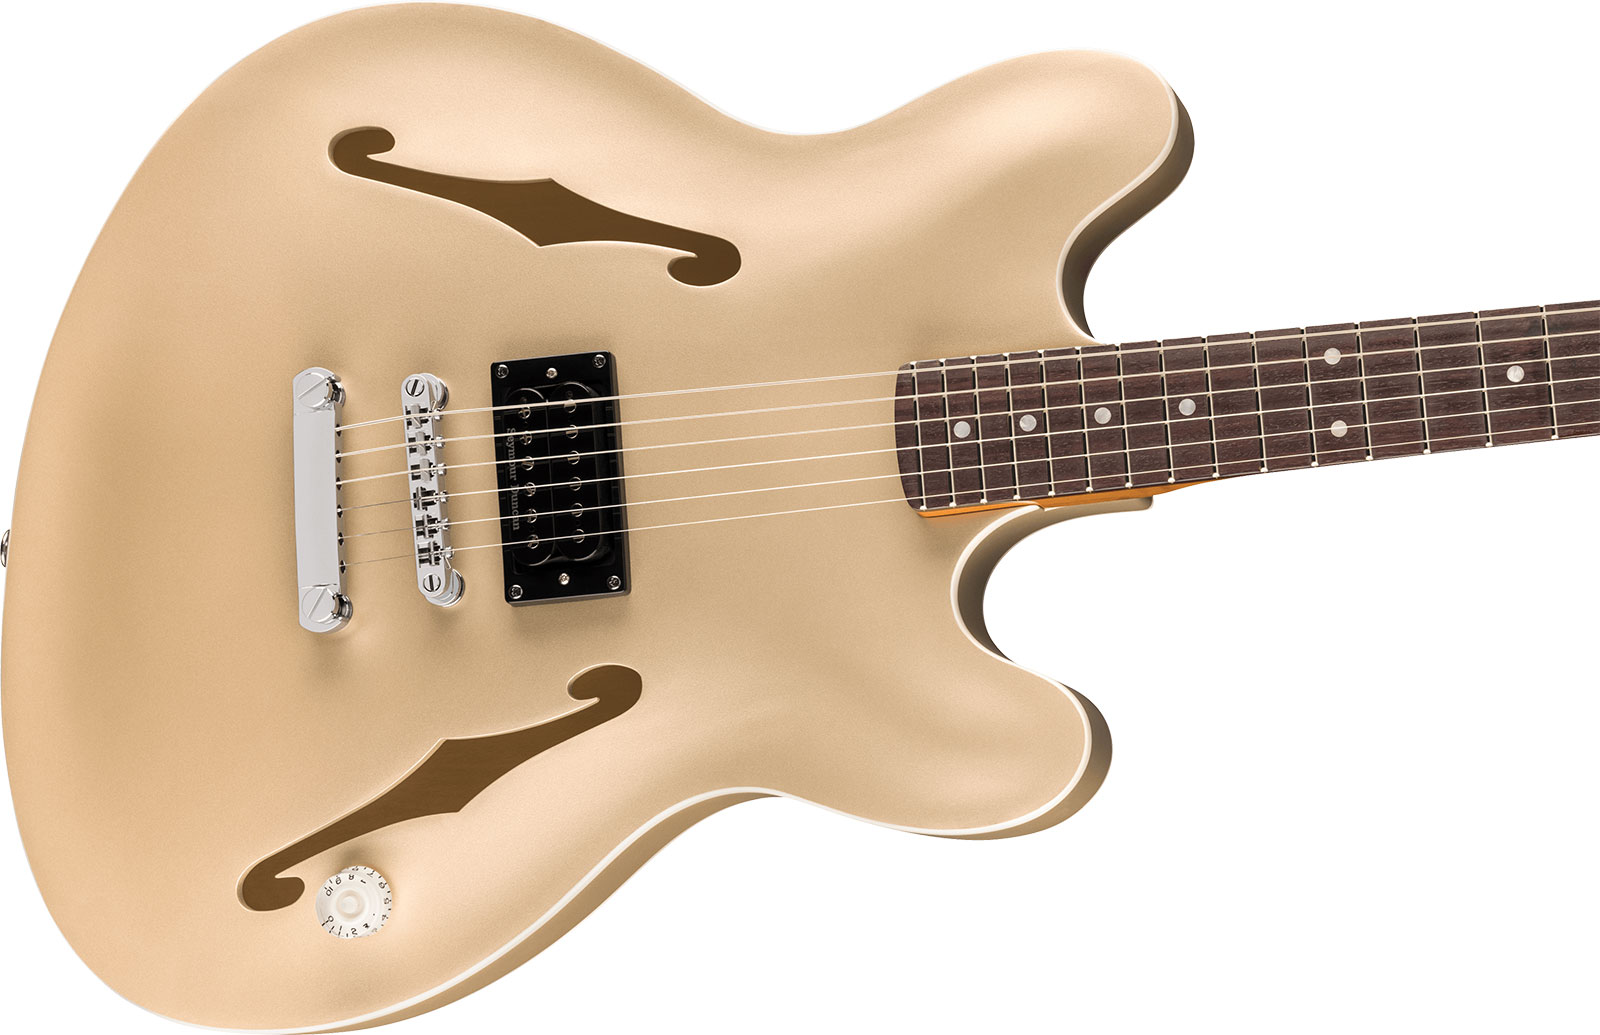 Fender Tom Delonge Starcaster 1h Seymour Duncan Ht Rw - Satin Shoreline Gold - Guitarra electrica retro rock - Variation 2